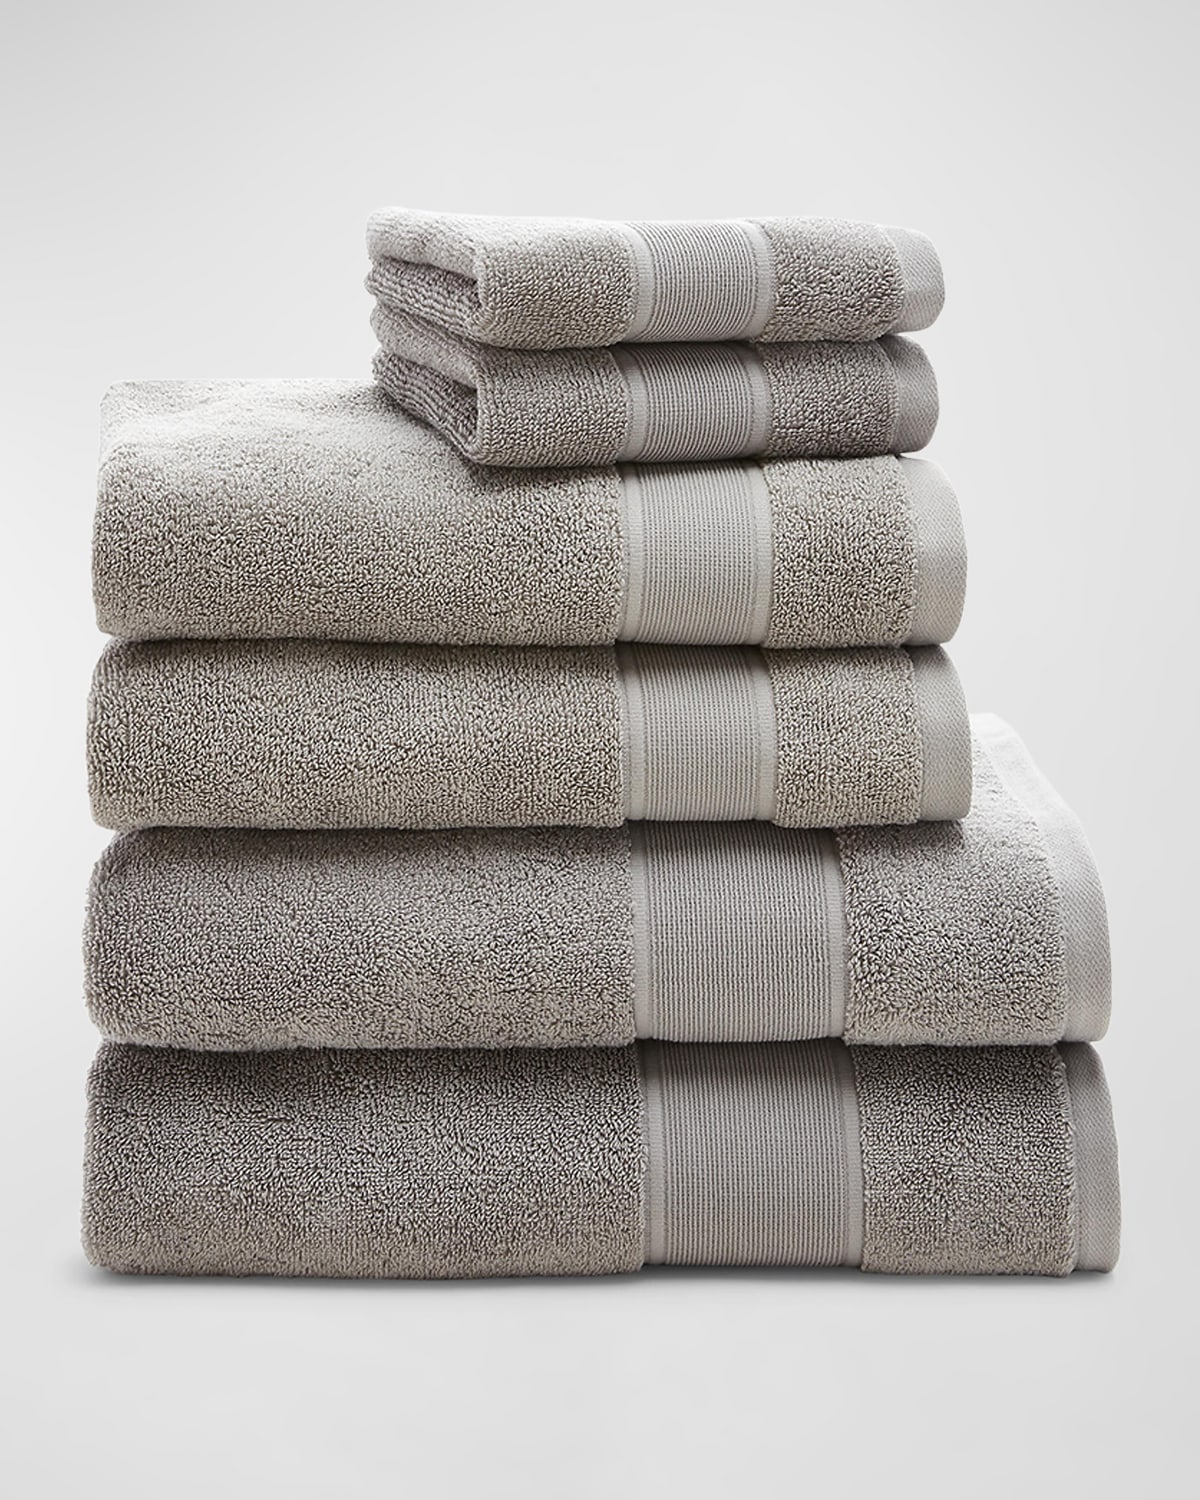 Sanders Antimicrobial Towels - 6 Piece Set